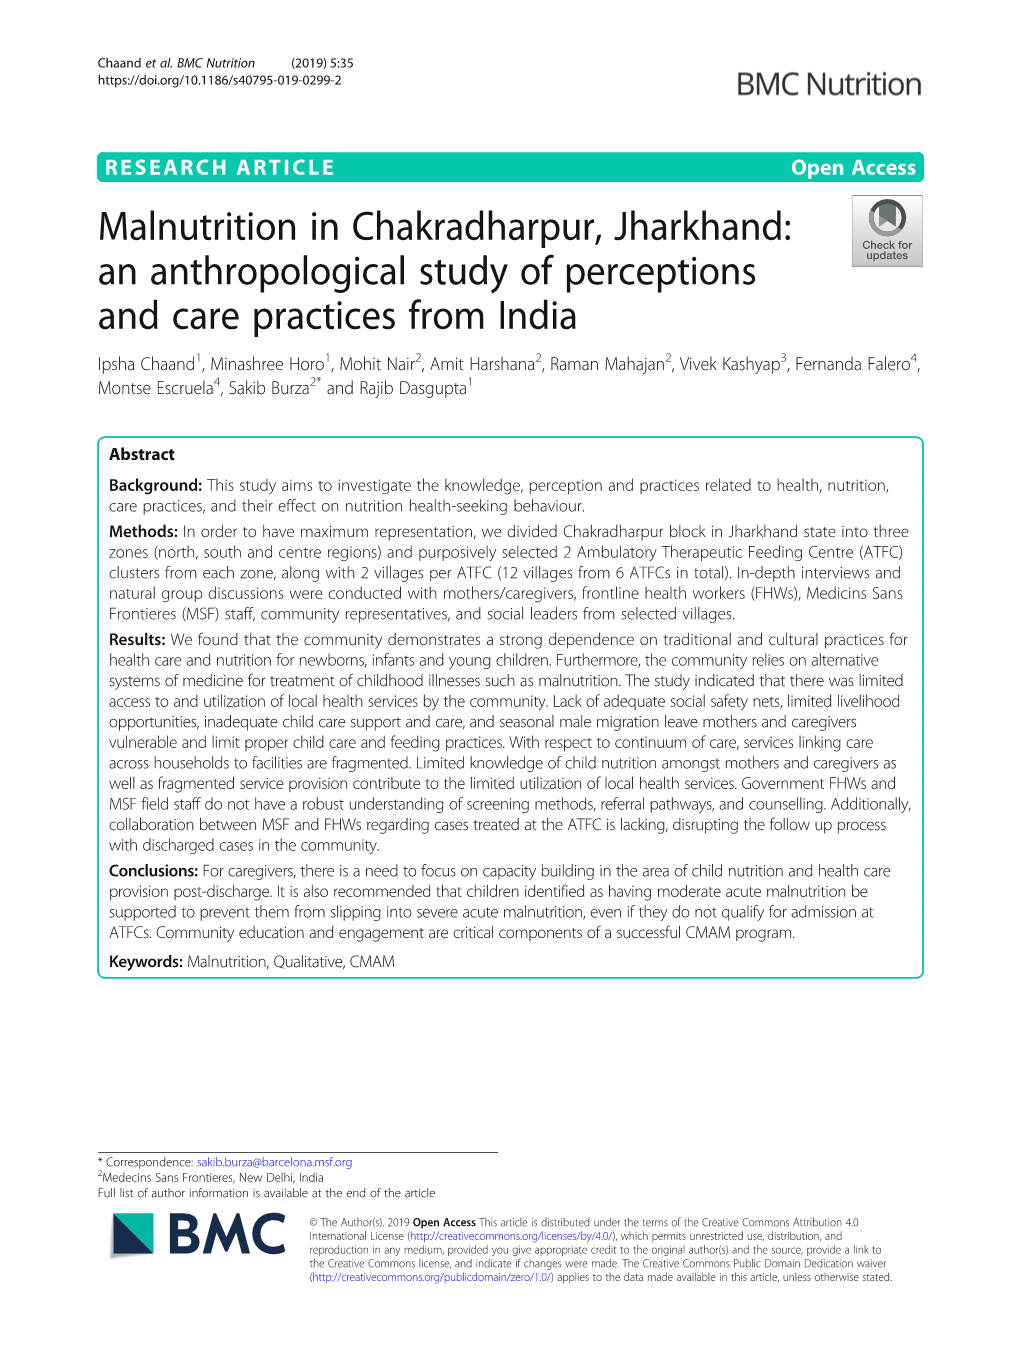 Malnutrition in Chakradharpur, Jharkhand: an Anthropological